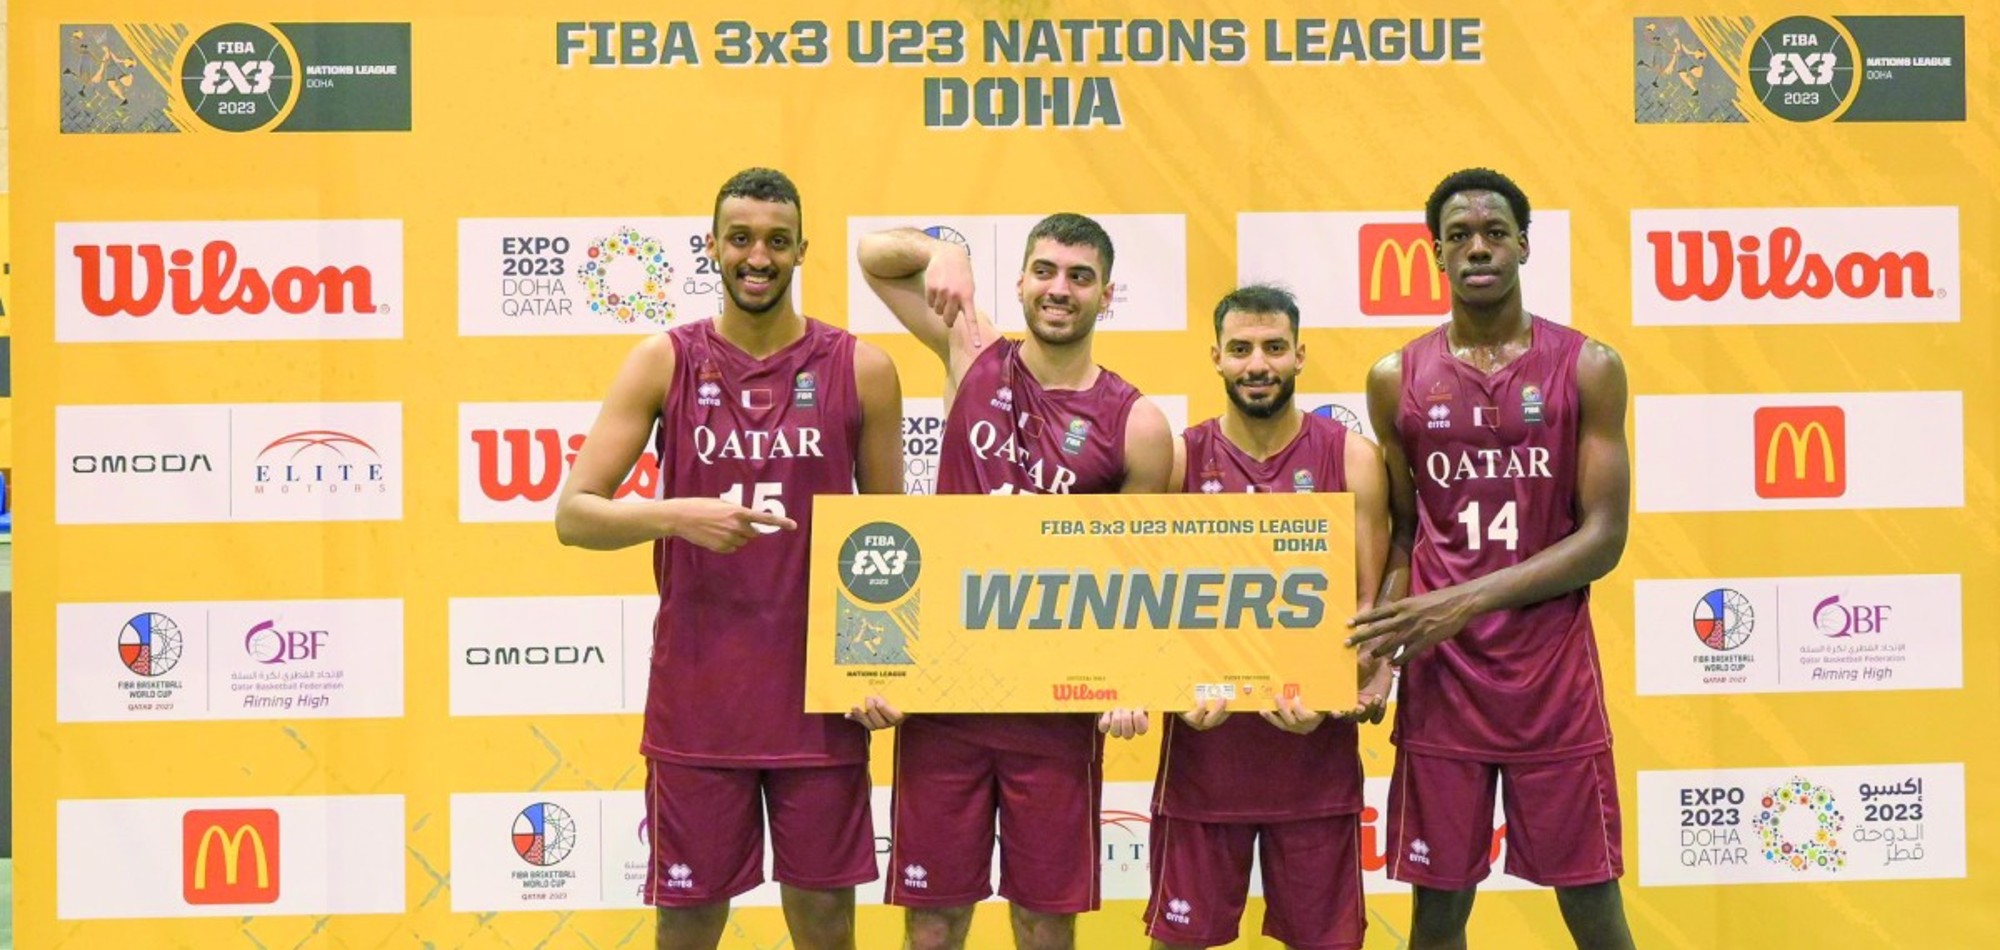 Qatar off to a flying start at the FIBA 3x3 U23 Nations League Doha 2023